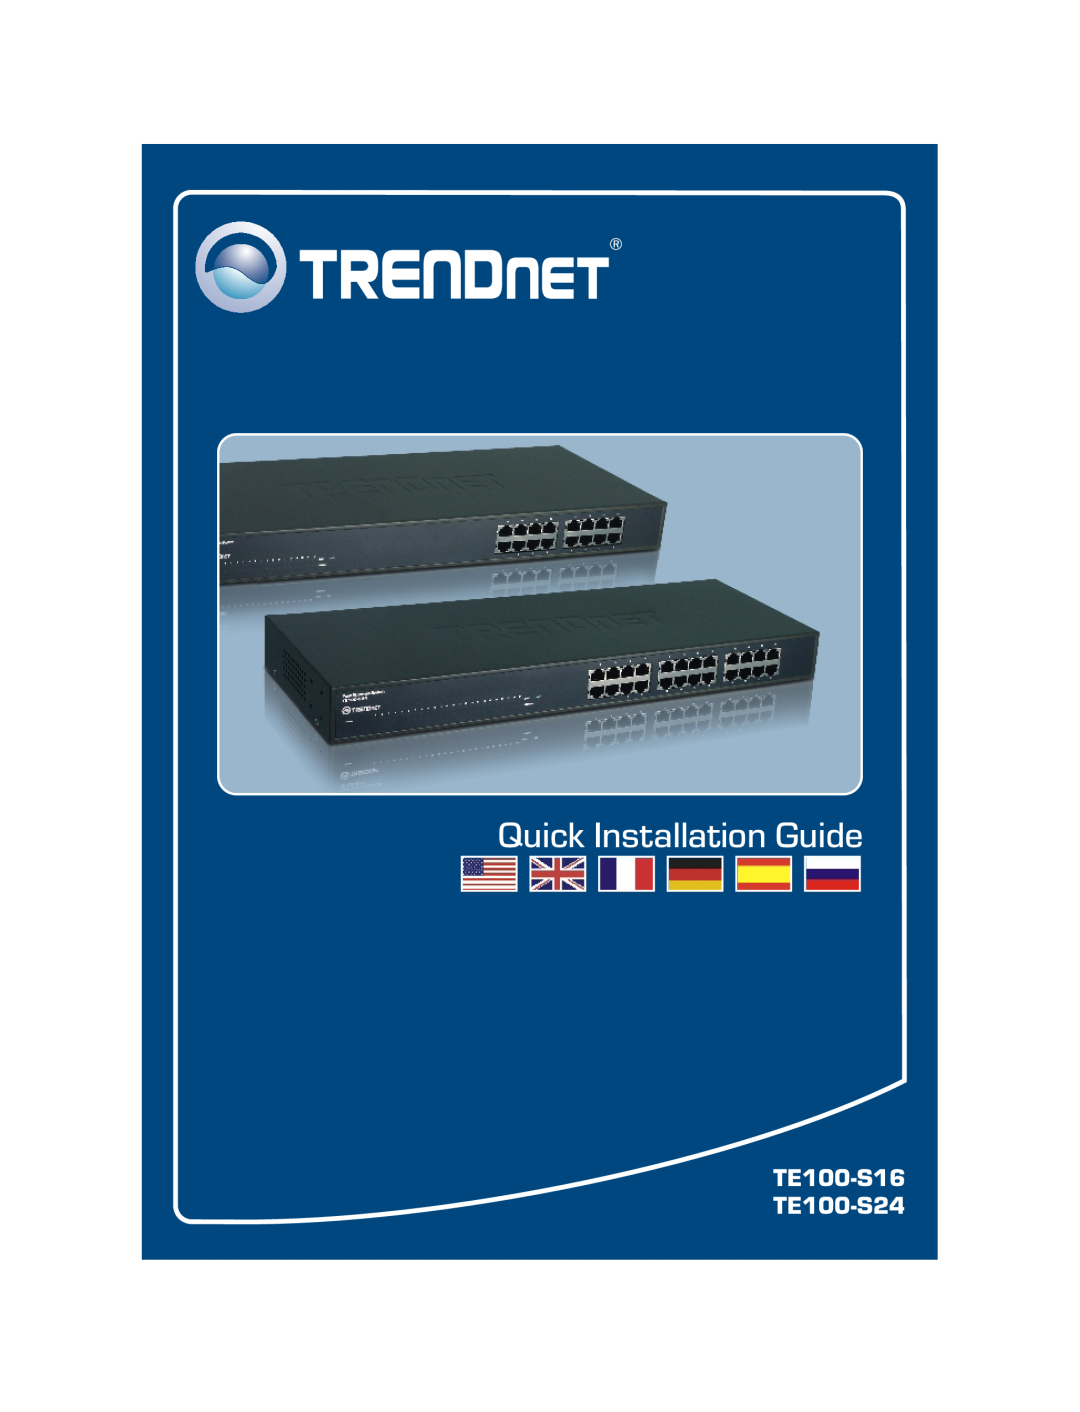 TRENDnet manual Quick Installation Guide, TE100-S16 TE100-S24 